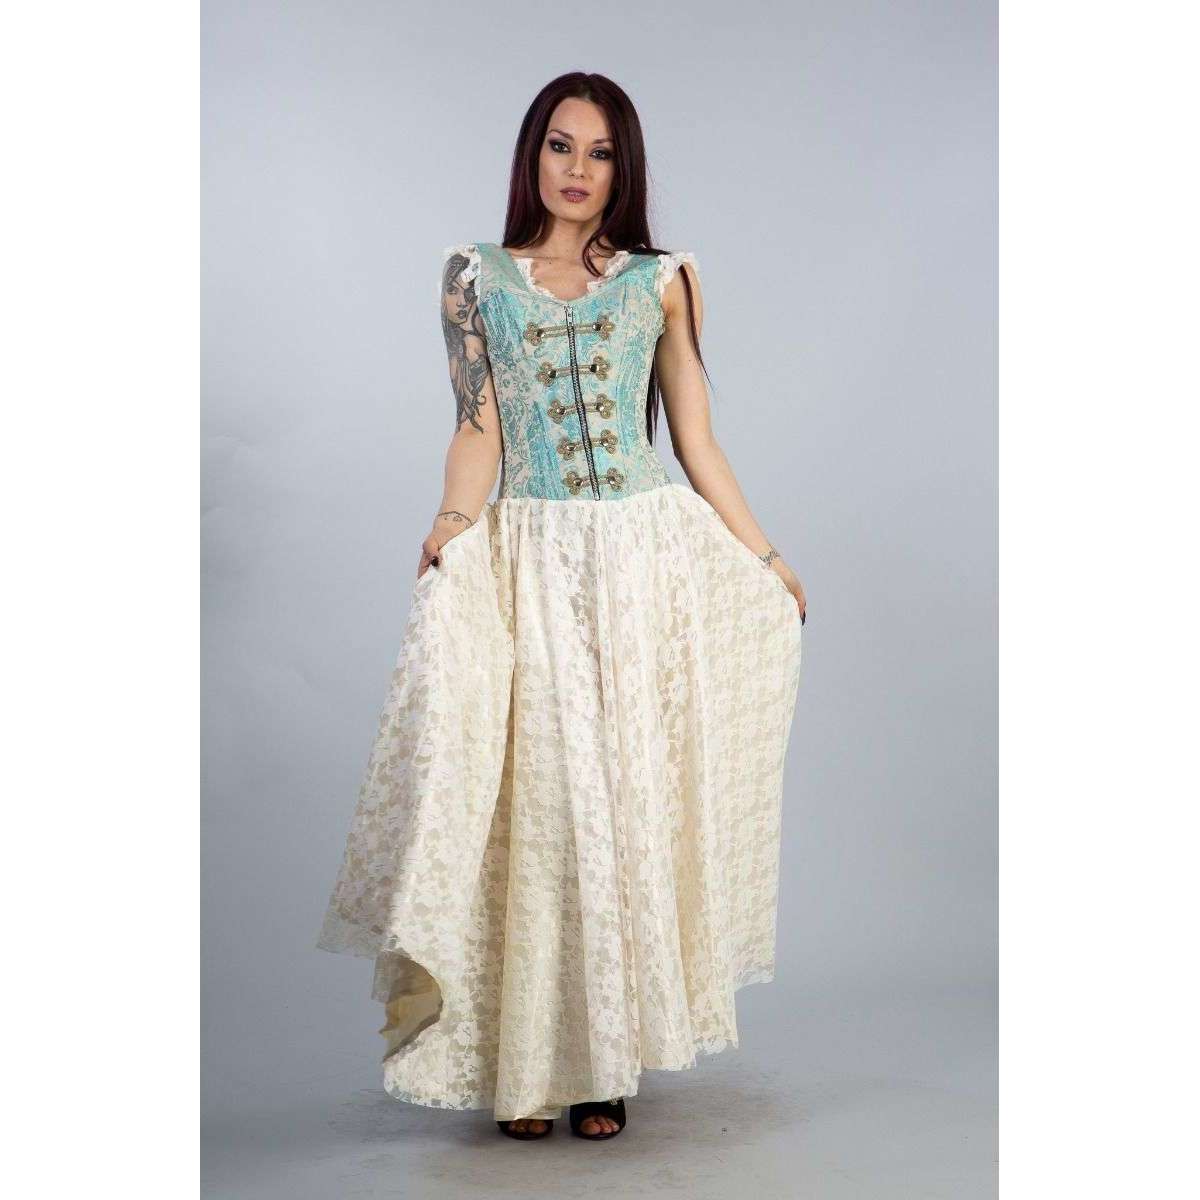 Gypsy Corset Dress in Turquoise Cream Jacquard/Cream Lace